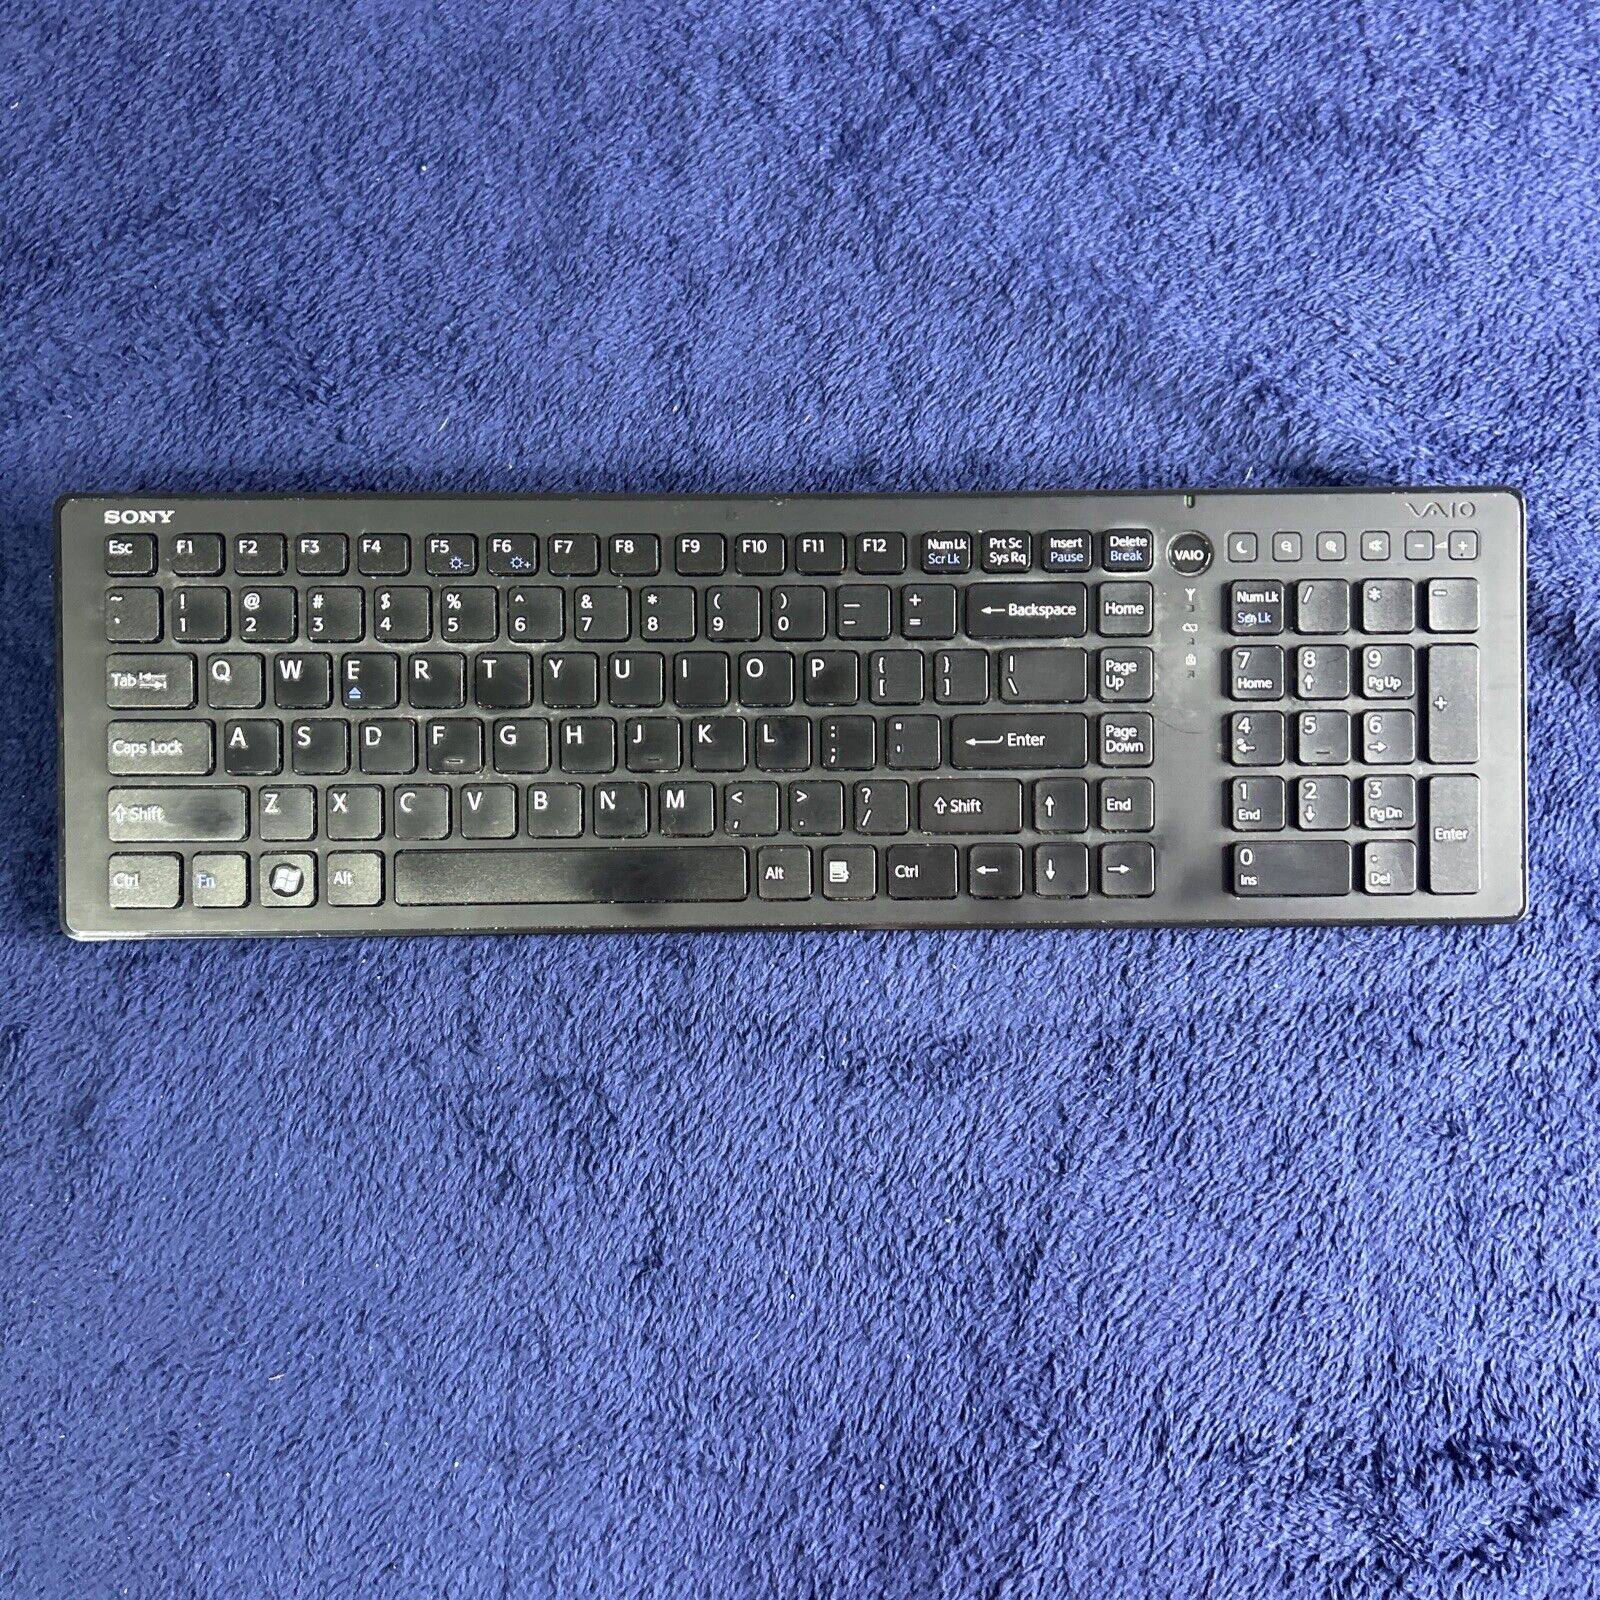 Sony VAIO Wireless Keyboard Model VGP-WKB11 Black No Dongle - Tested Works ✅